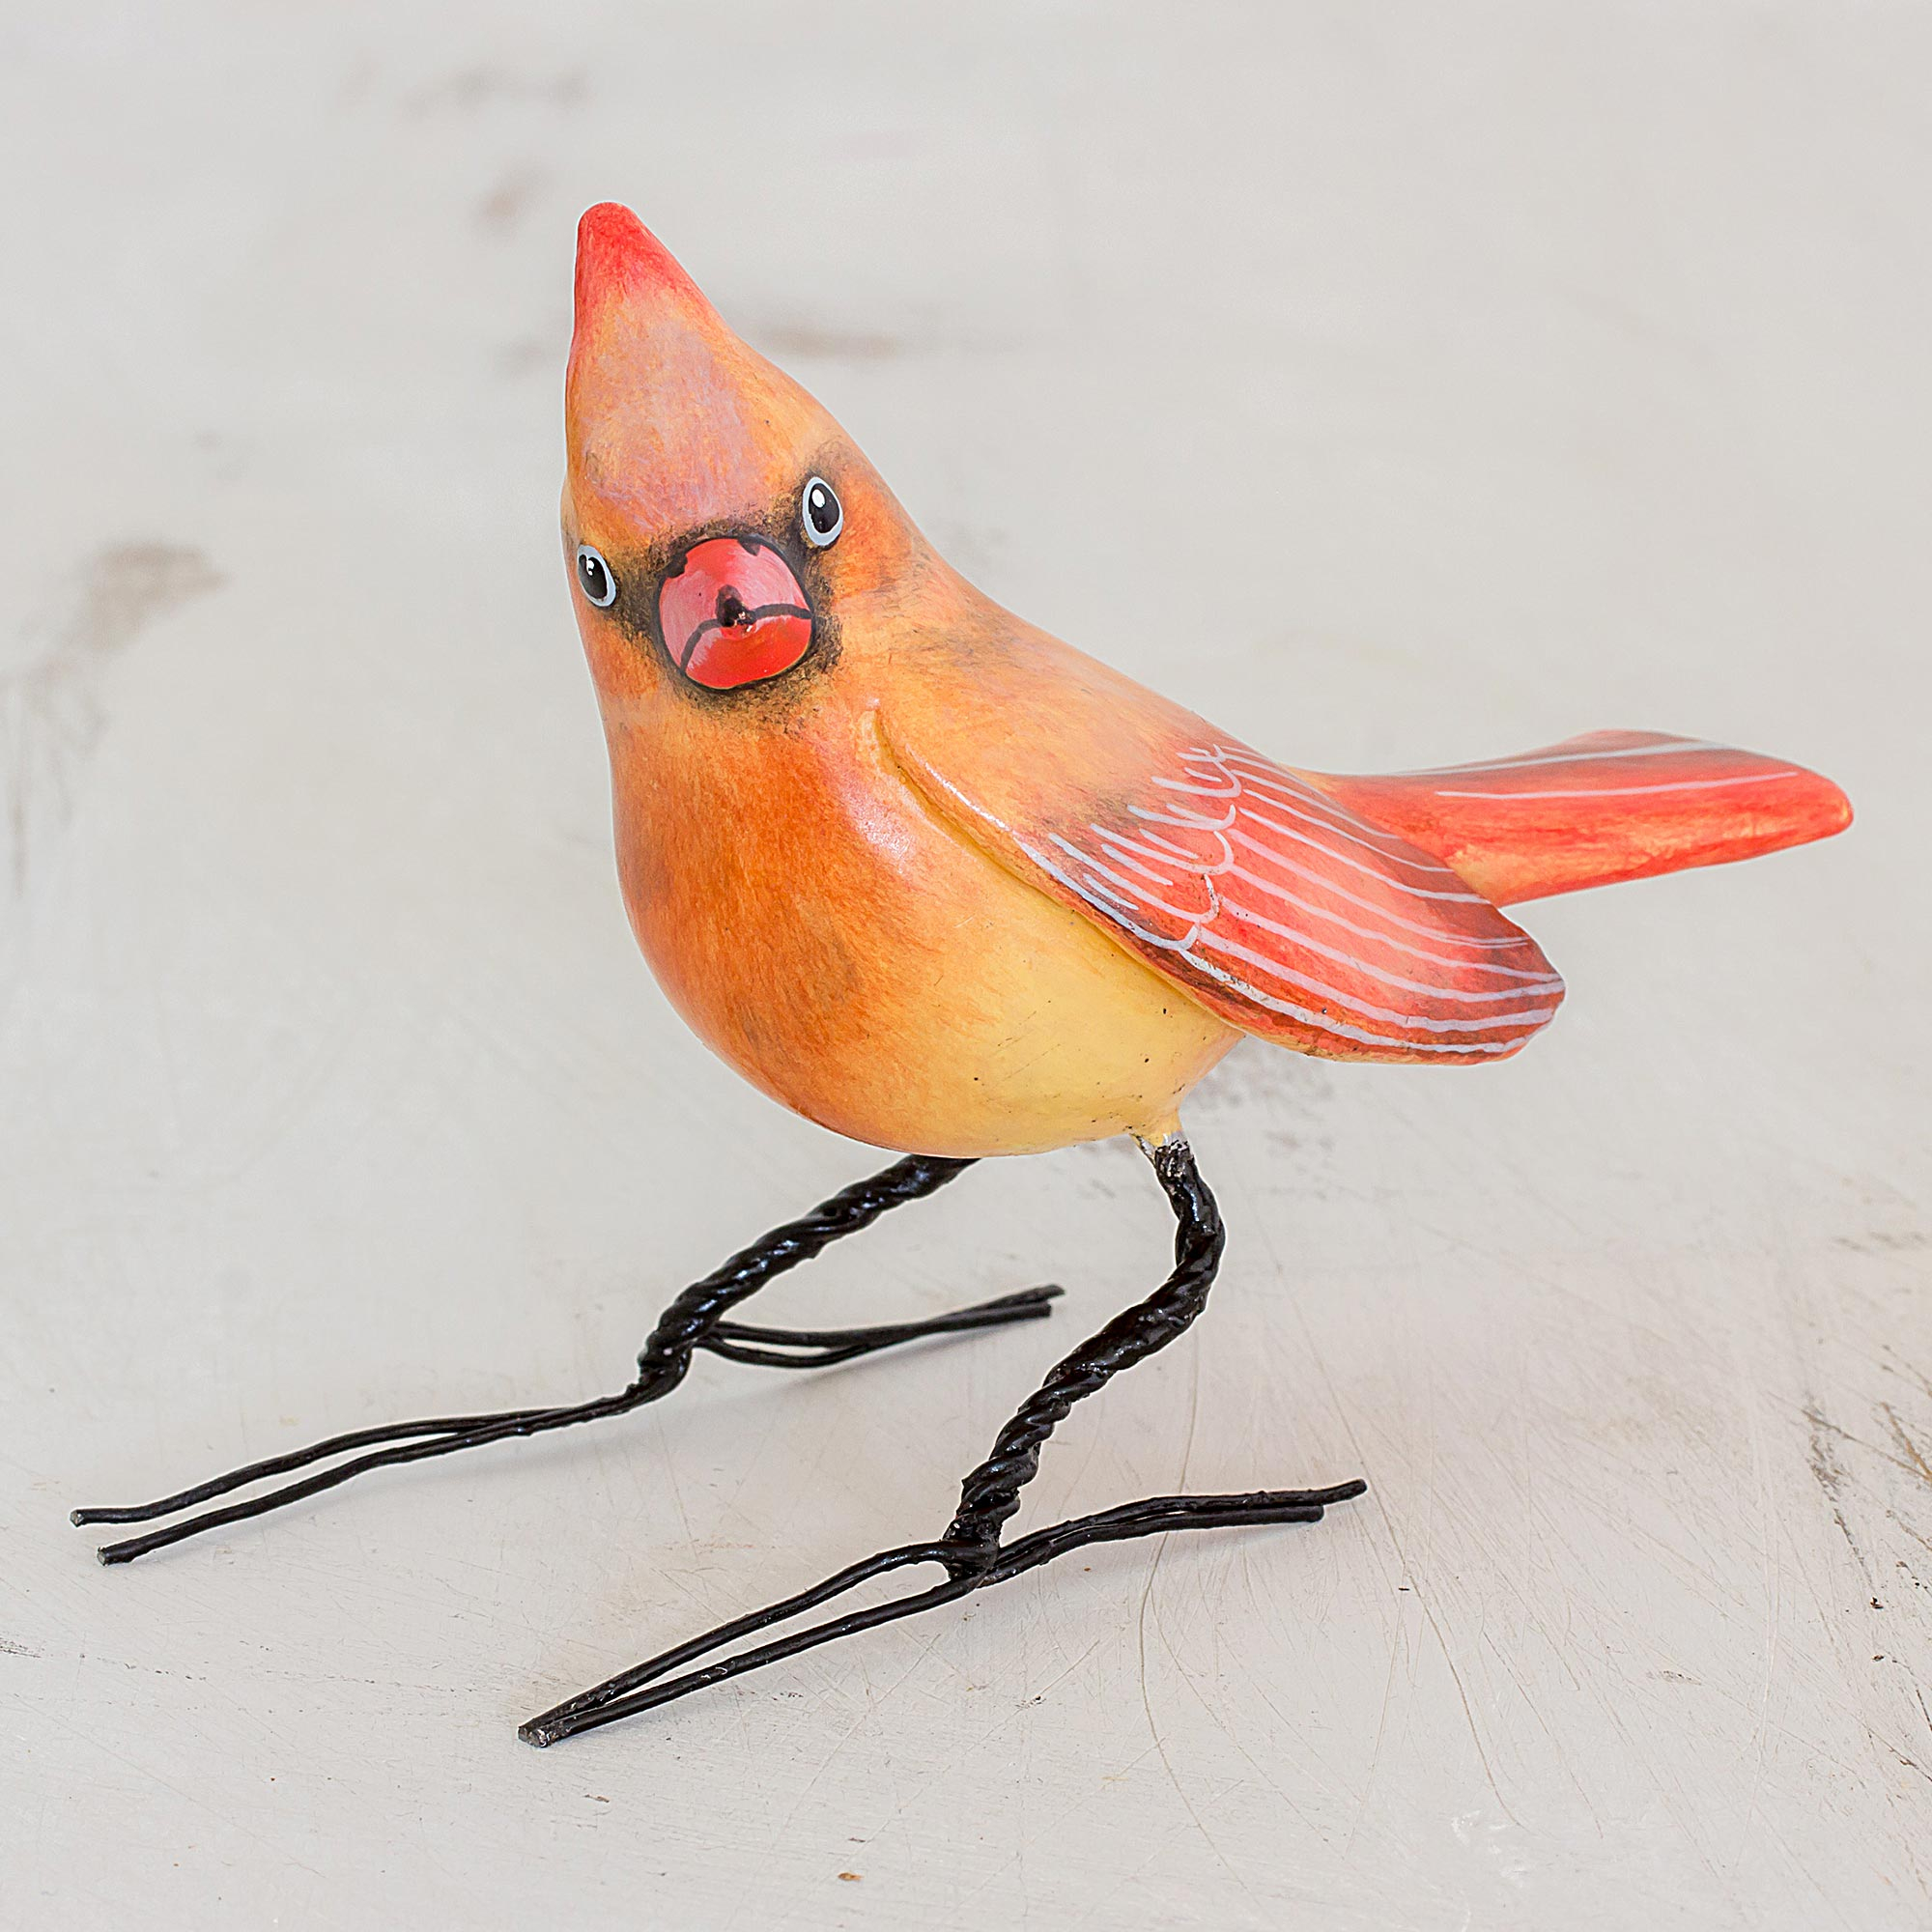 Handmade Cardinal Clay Bird Figurine from Guatemala - Cardinal